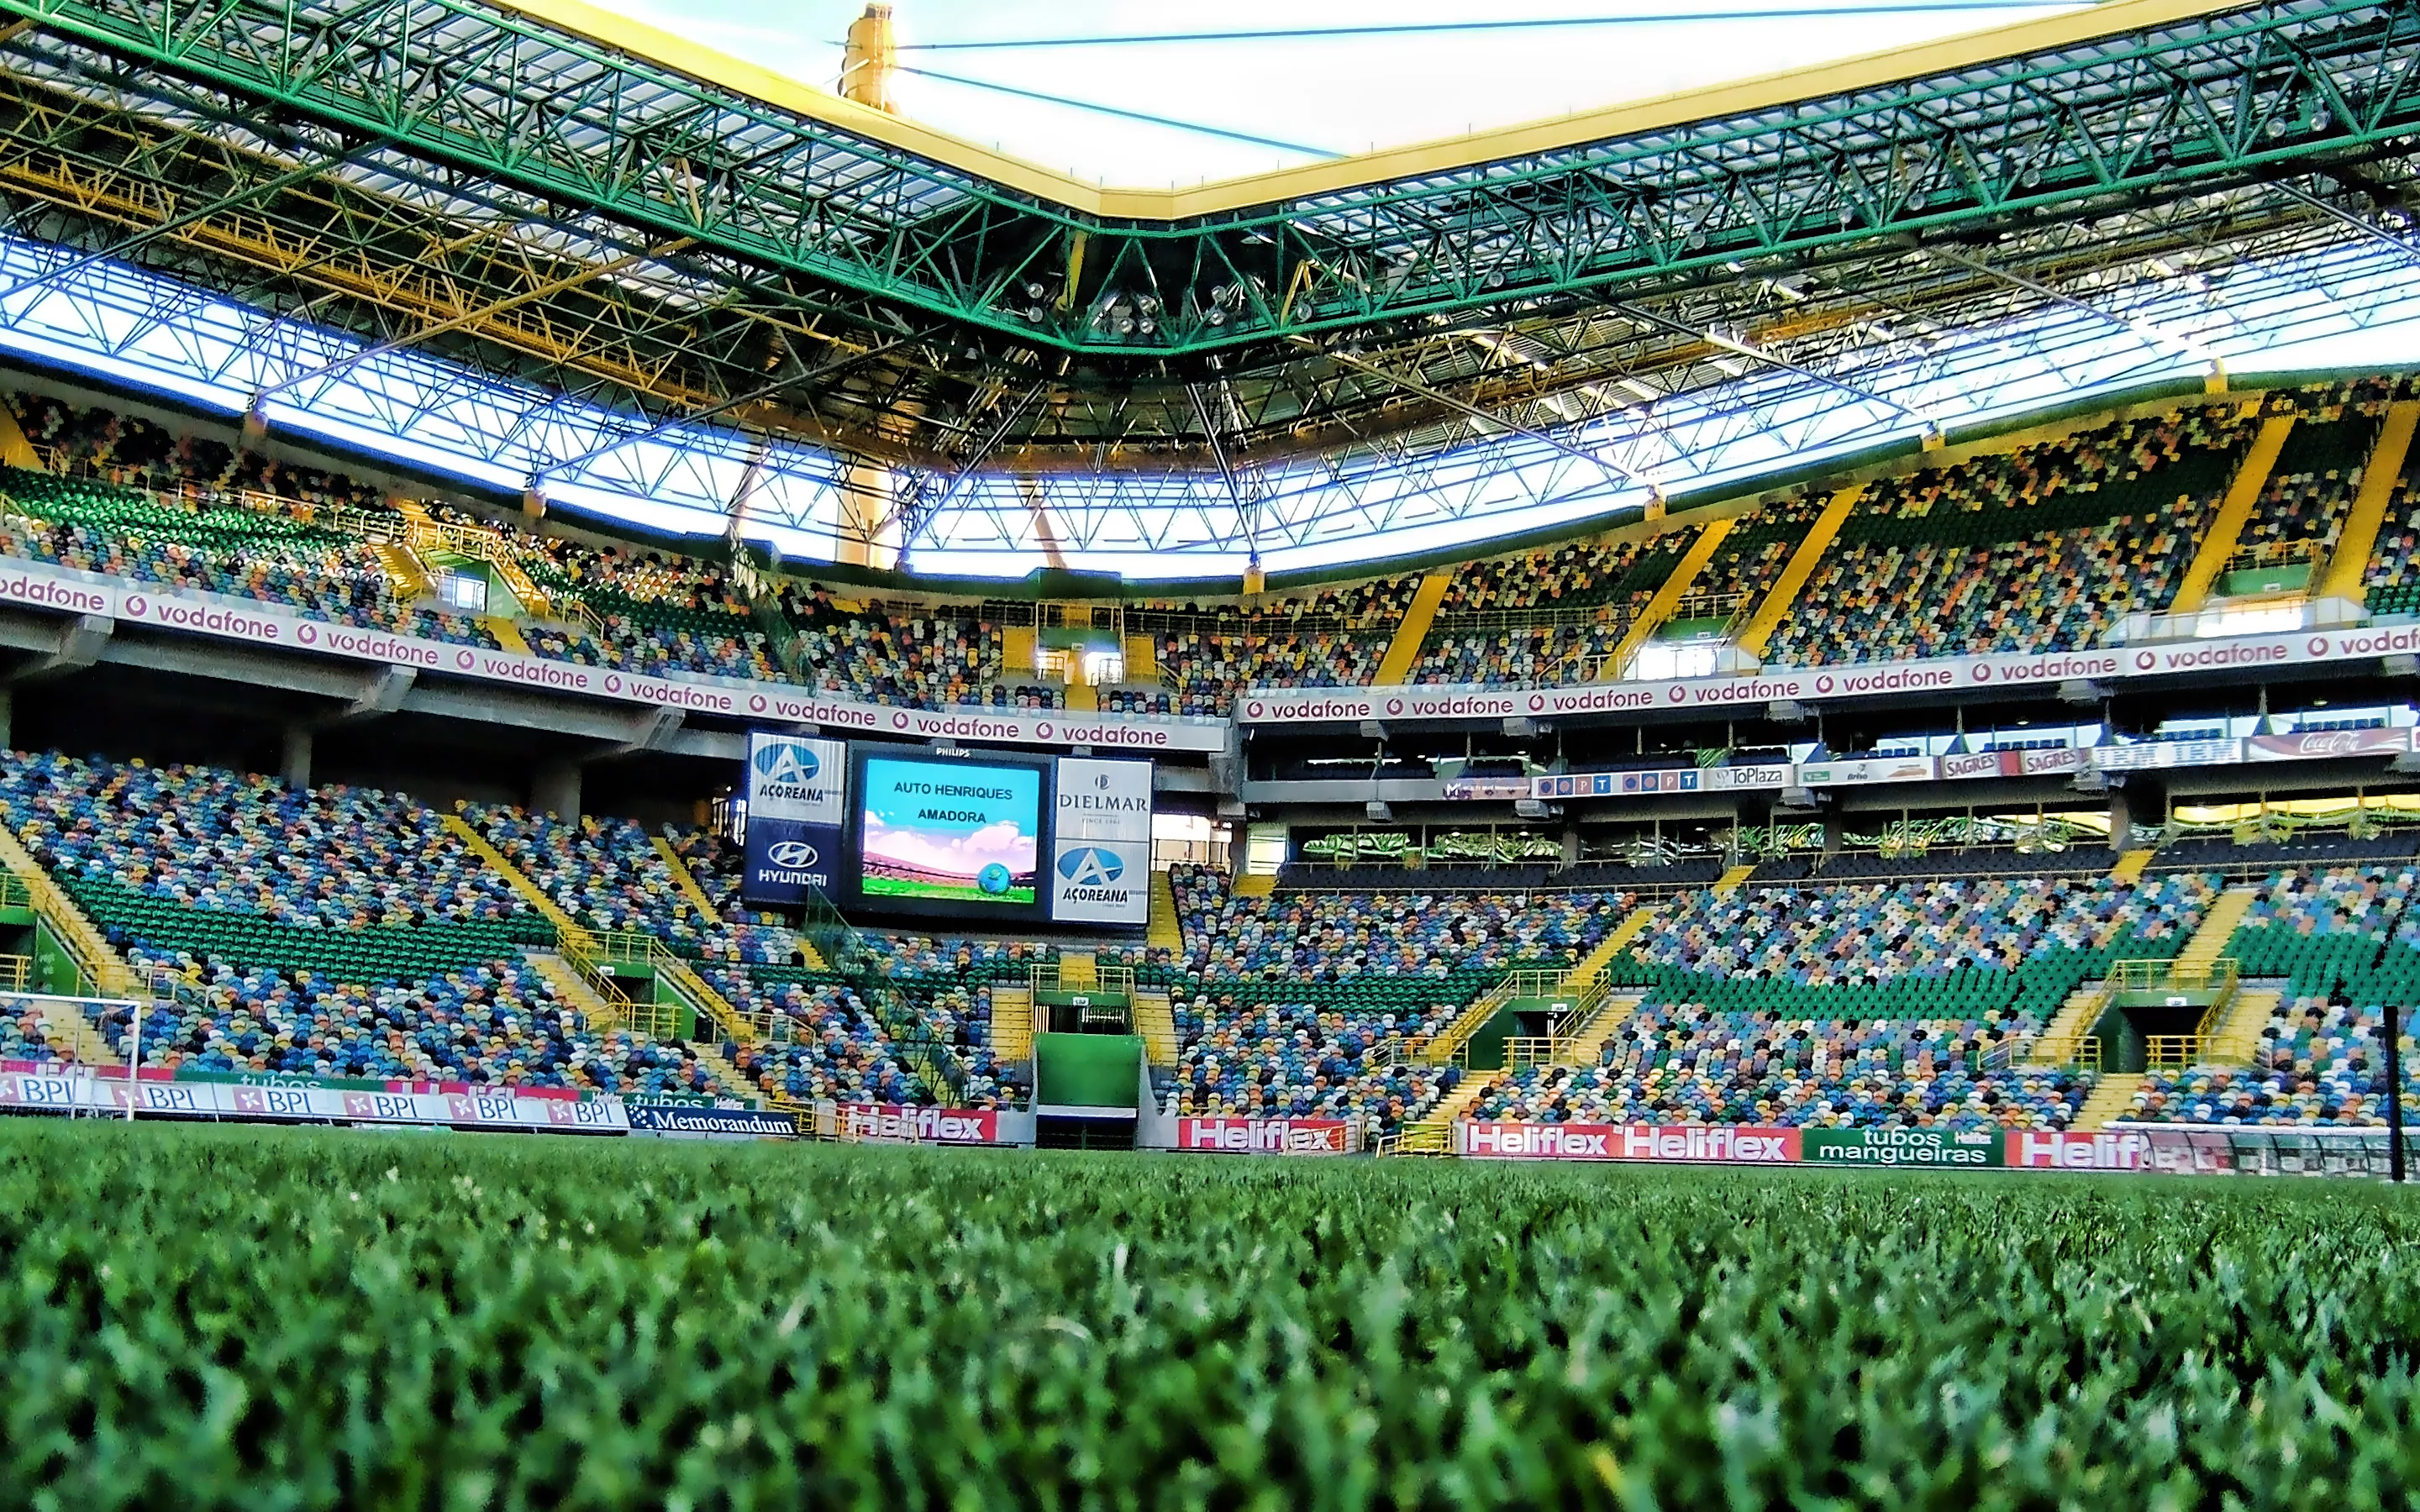 Estadio Jose Alvalade in Portugal, Europe | Football - Rated 4.3